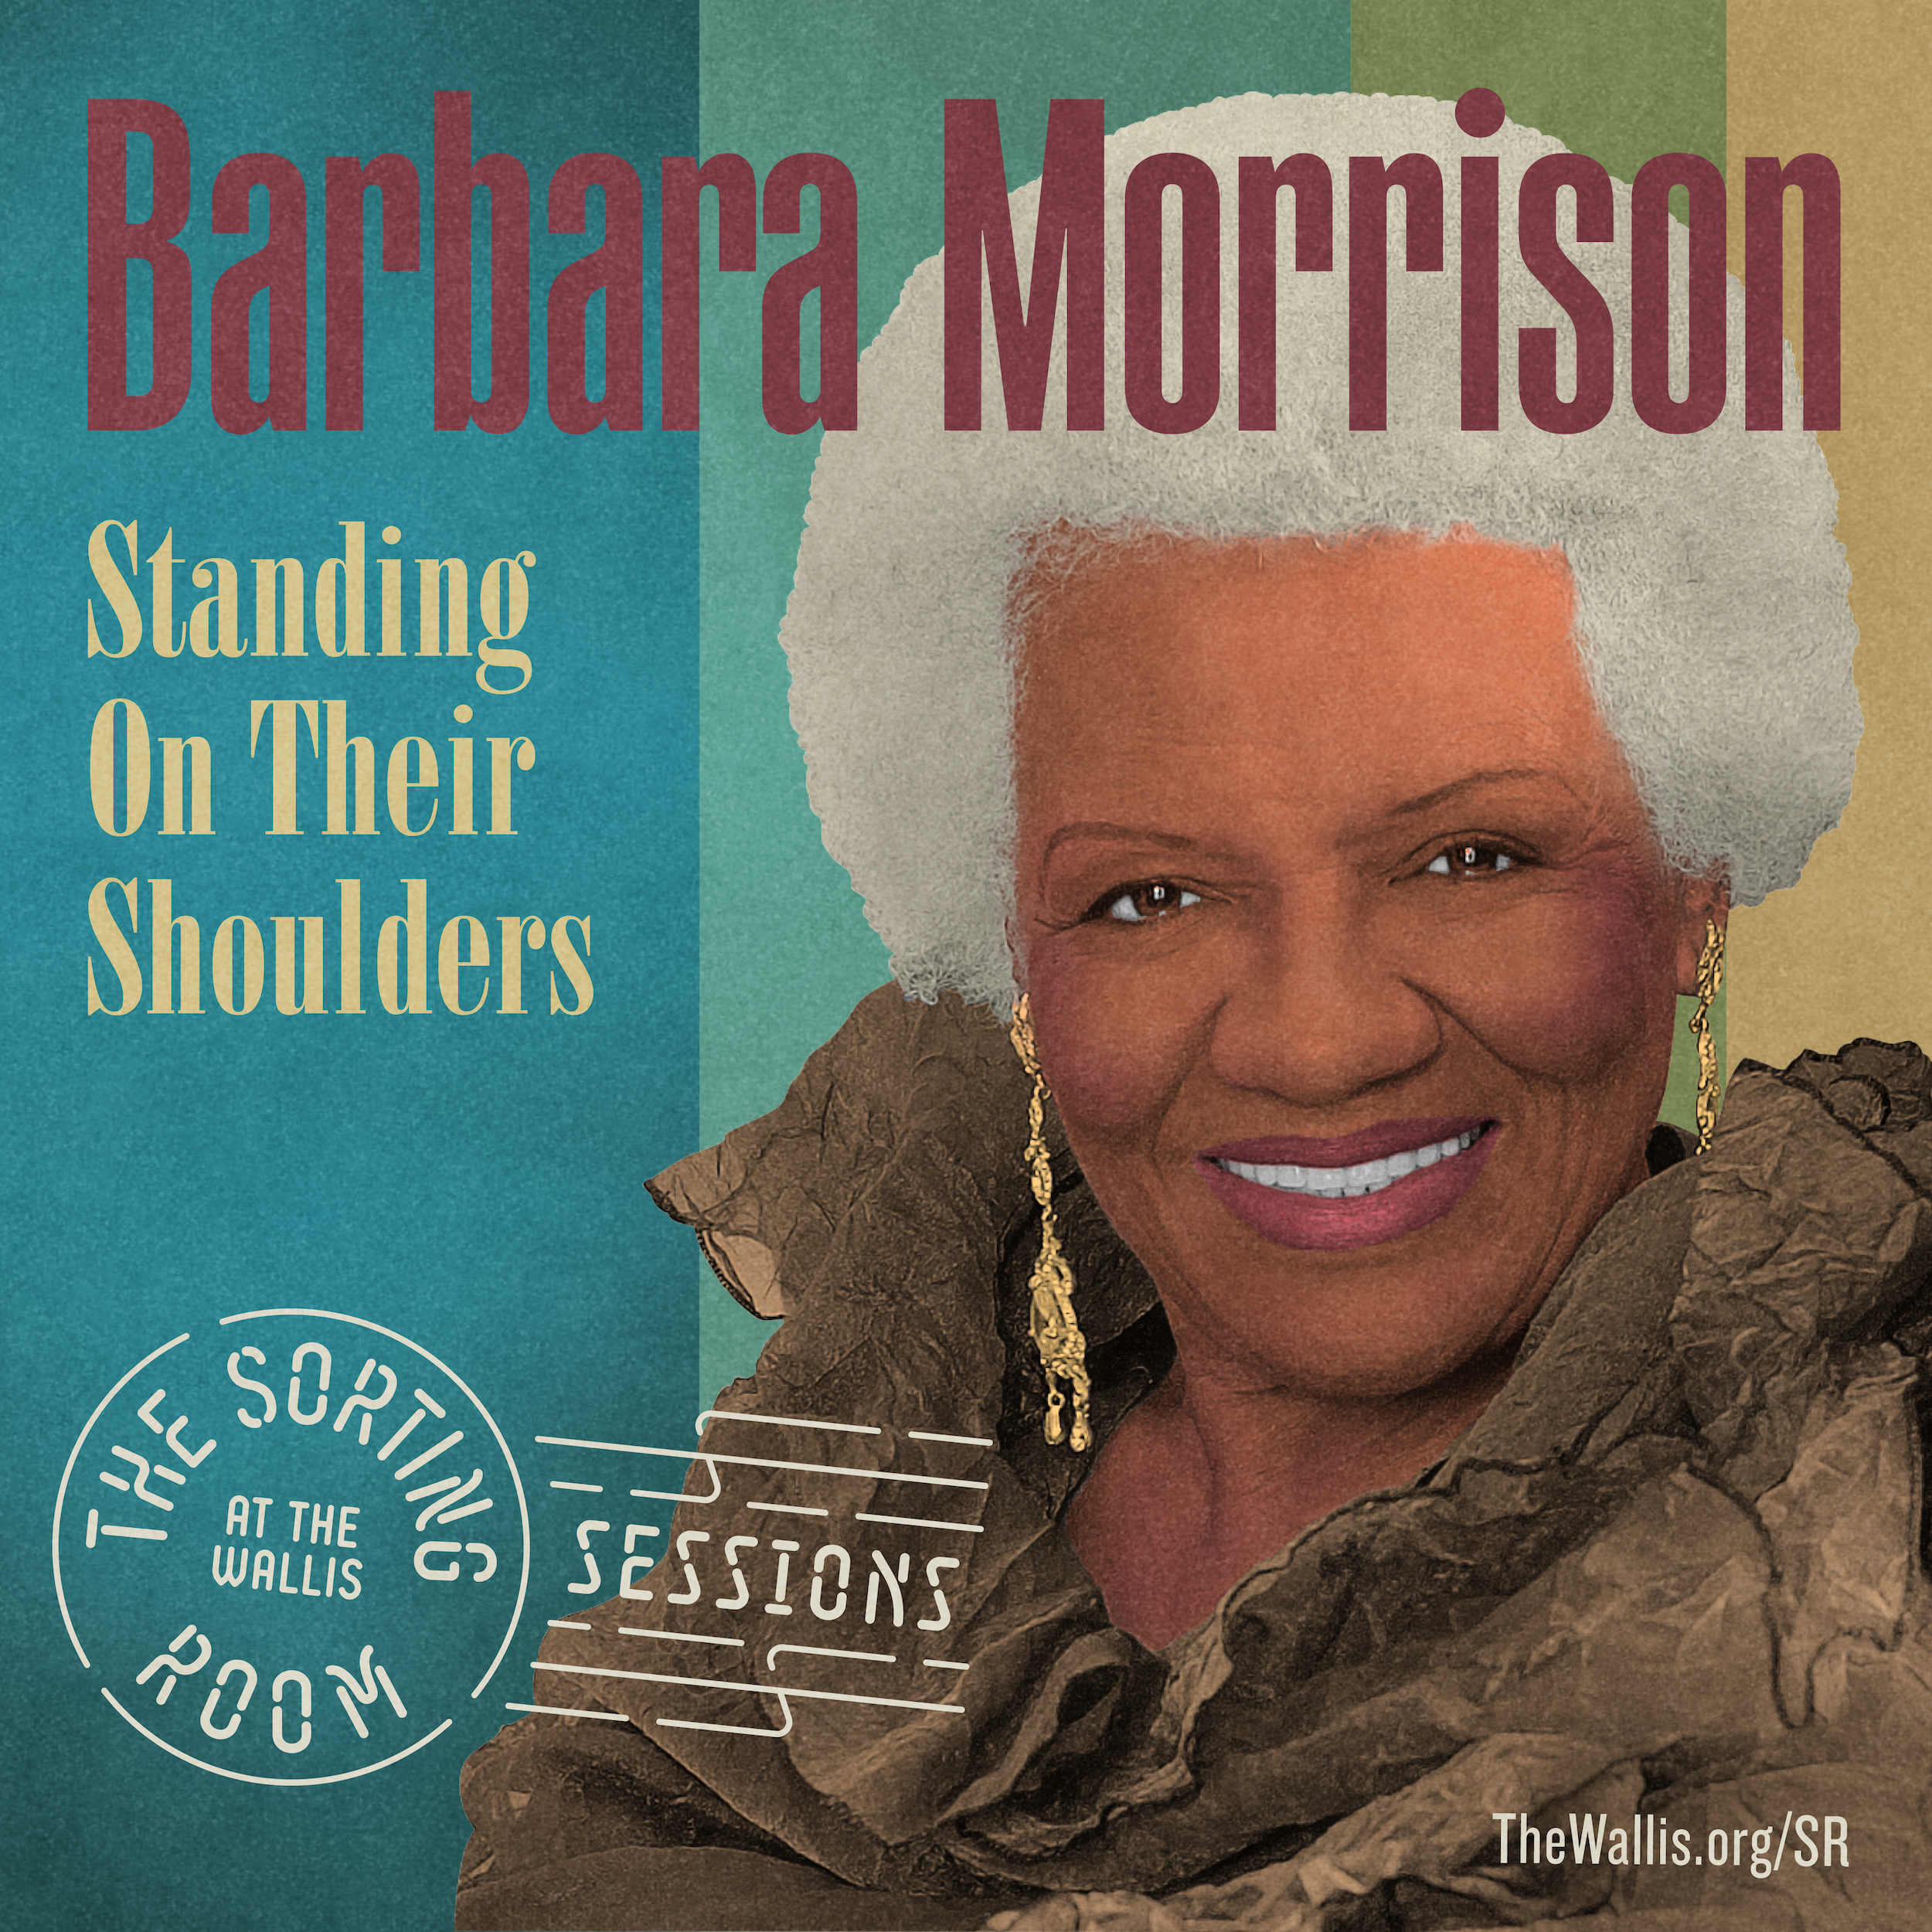 Barbara Morrison: Standing On Their Shoulders